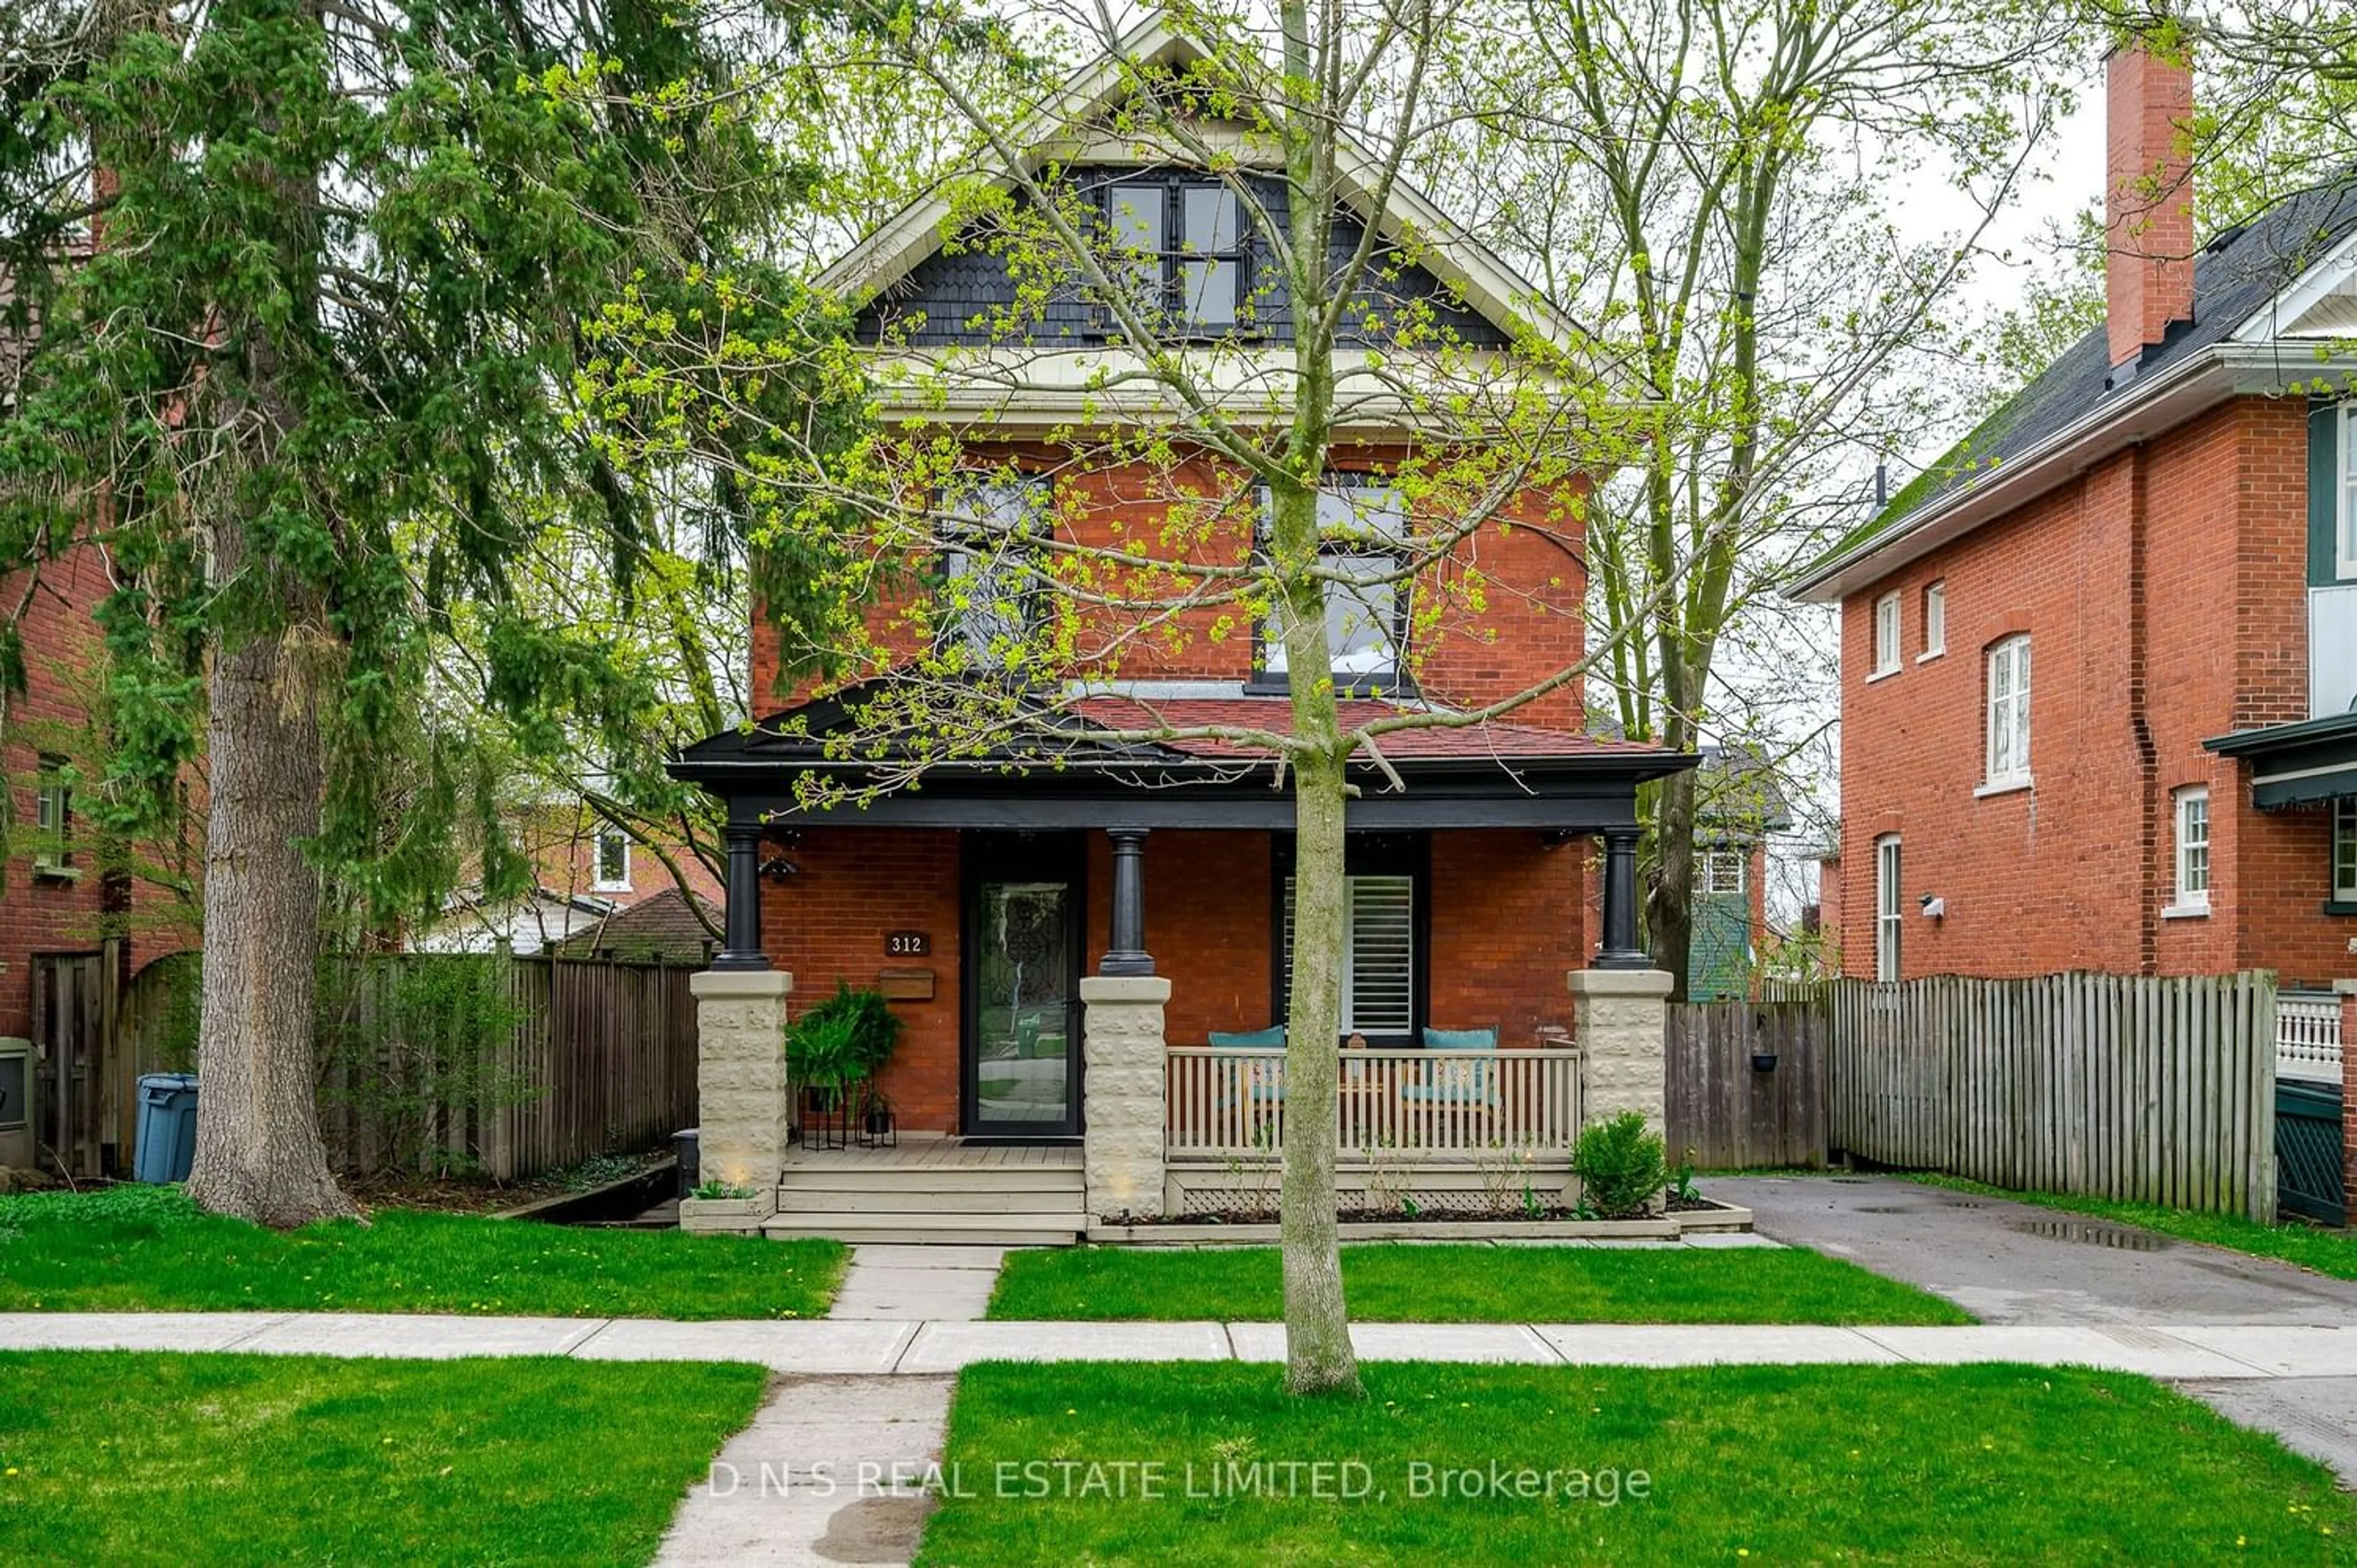 Home with brick exterior material for 312 Elias Ave, Peterborough Ontario K9J 5G9